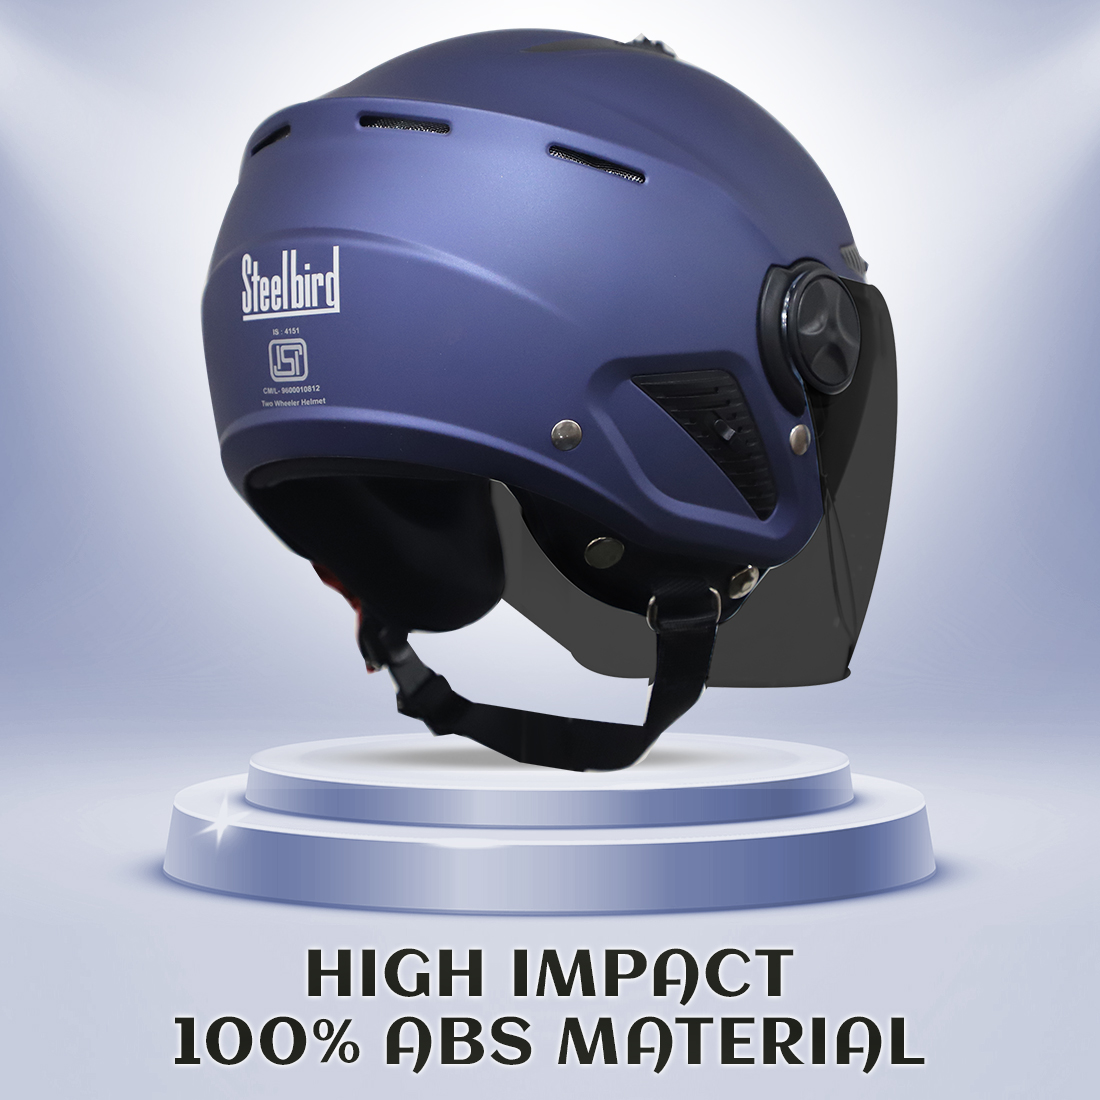 Steelbird SBH-24 Boxx ISI Certified Open Face Helmet For Men And Women (Matt H. Blue With Smoke Visor)